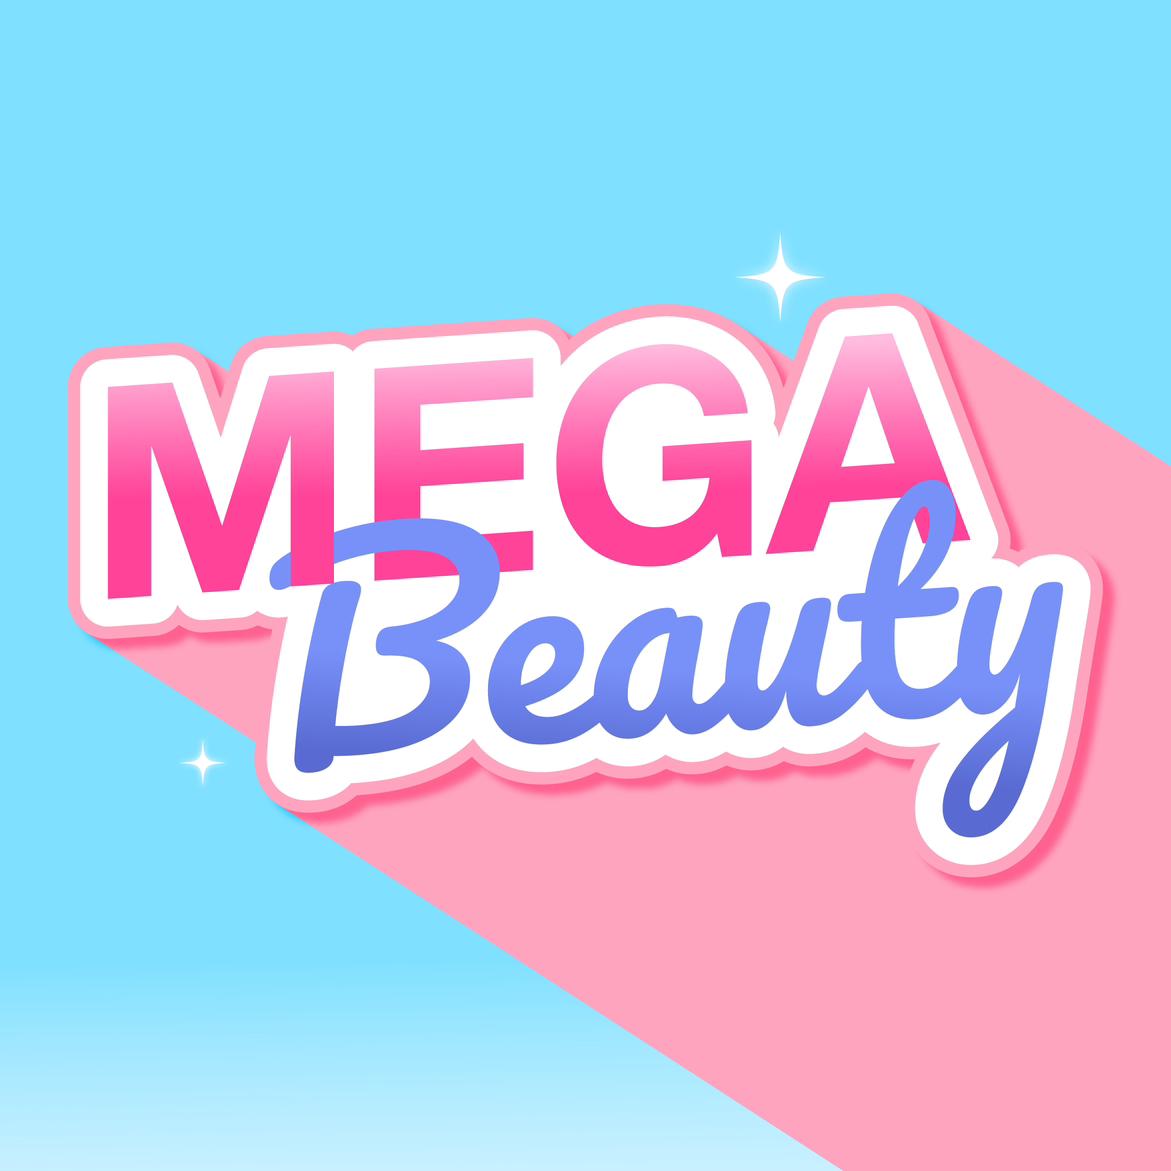 MEGA Beauty's images